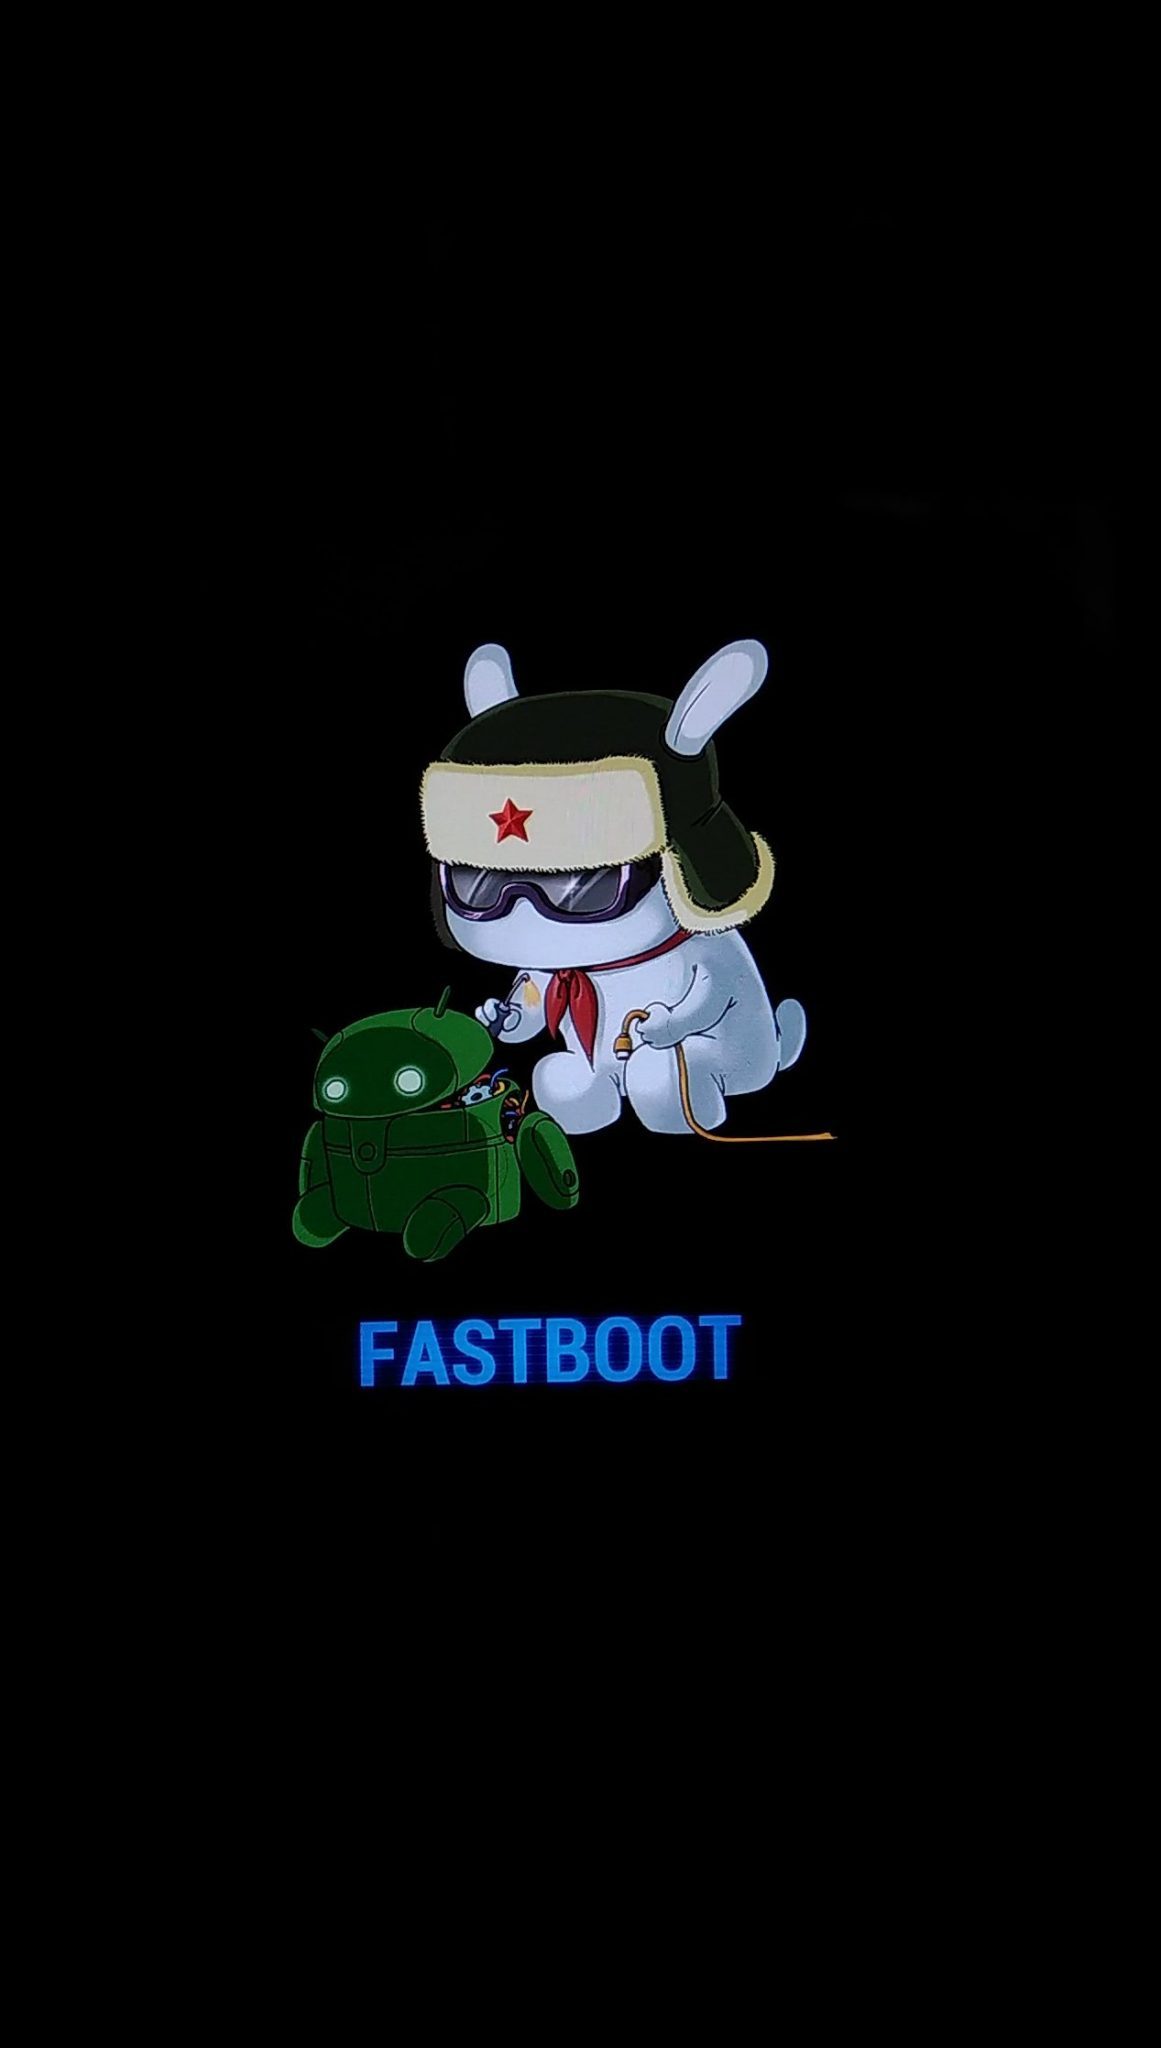 Xiaomi redmi прошивка fastboot. Xiaomi заяц Fastboot. Заяц андроид Fastboot. Xiaomi заяц в ушанке Fastboot. Талисман Xiaomi Fastboot.